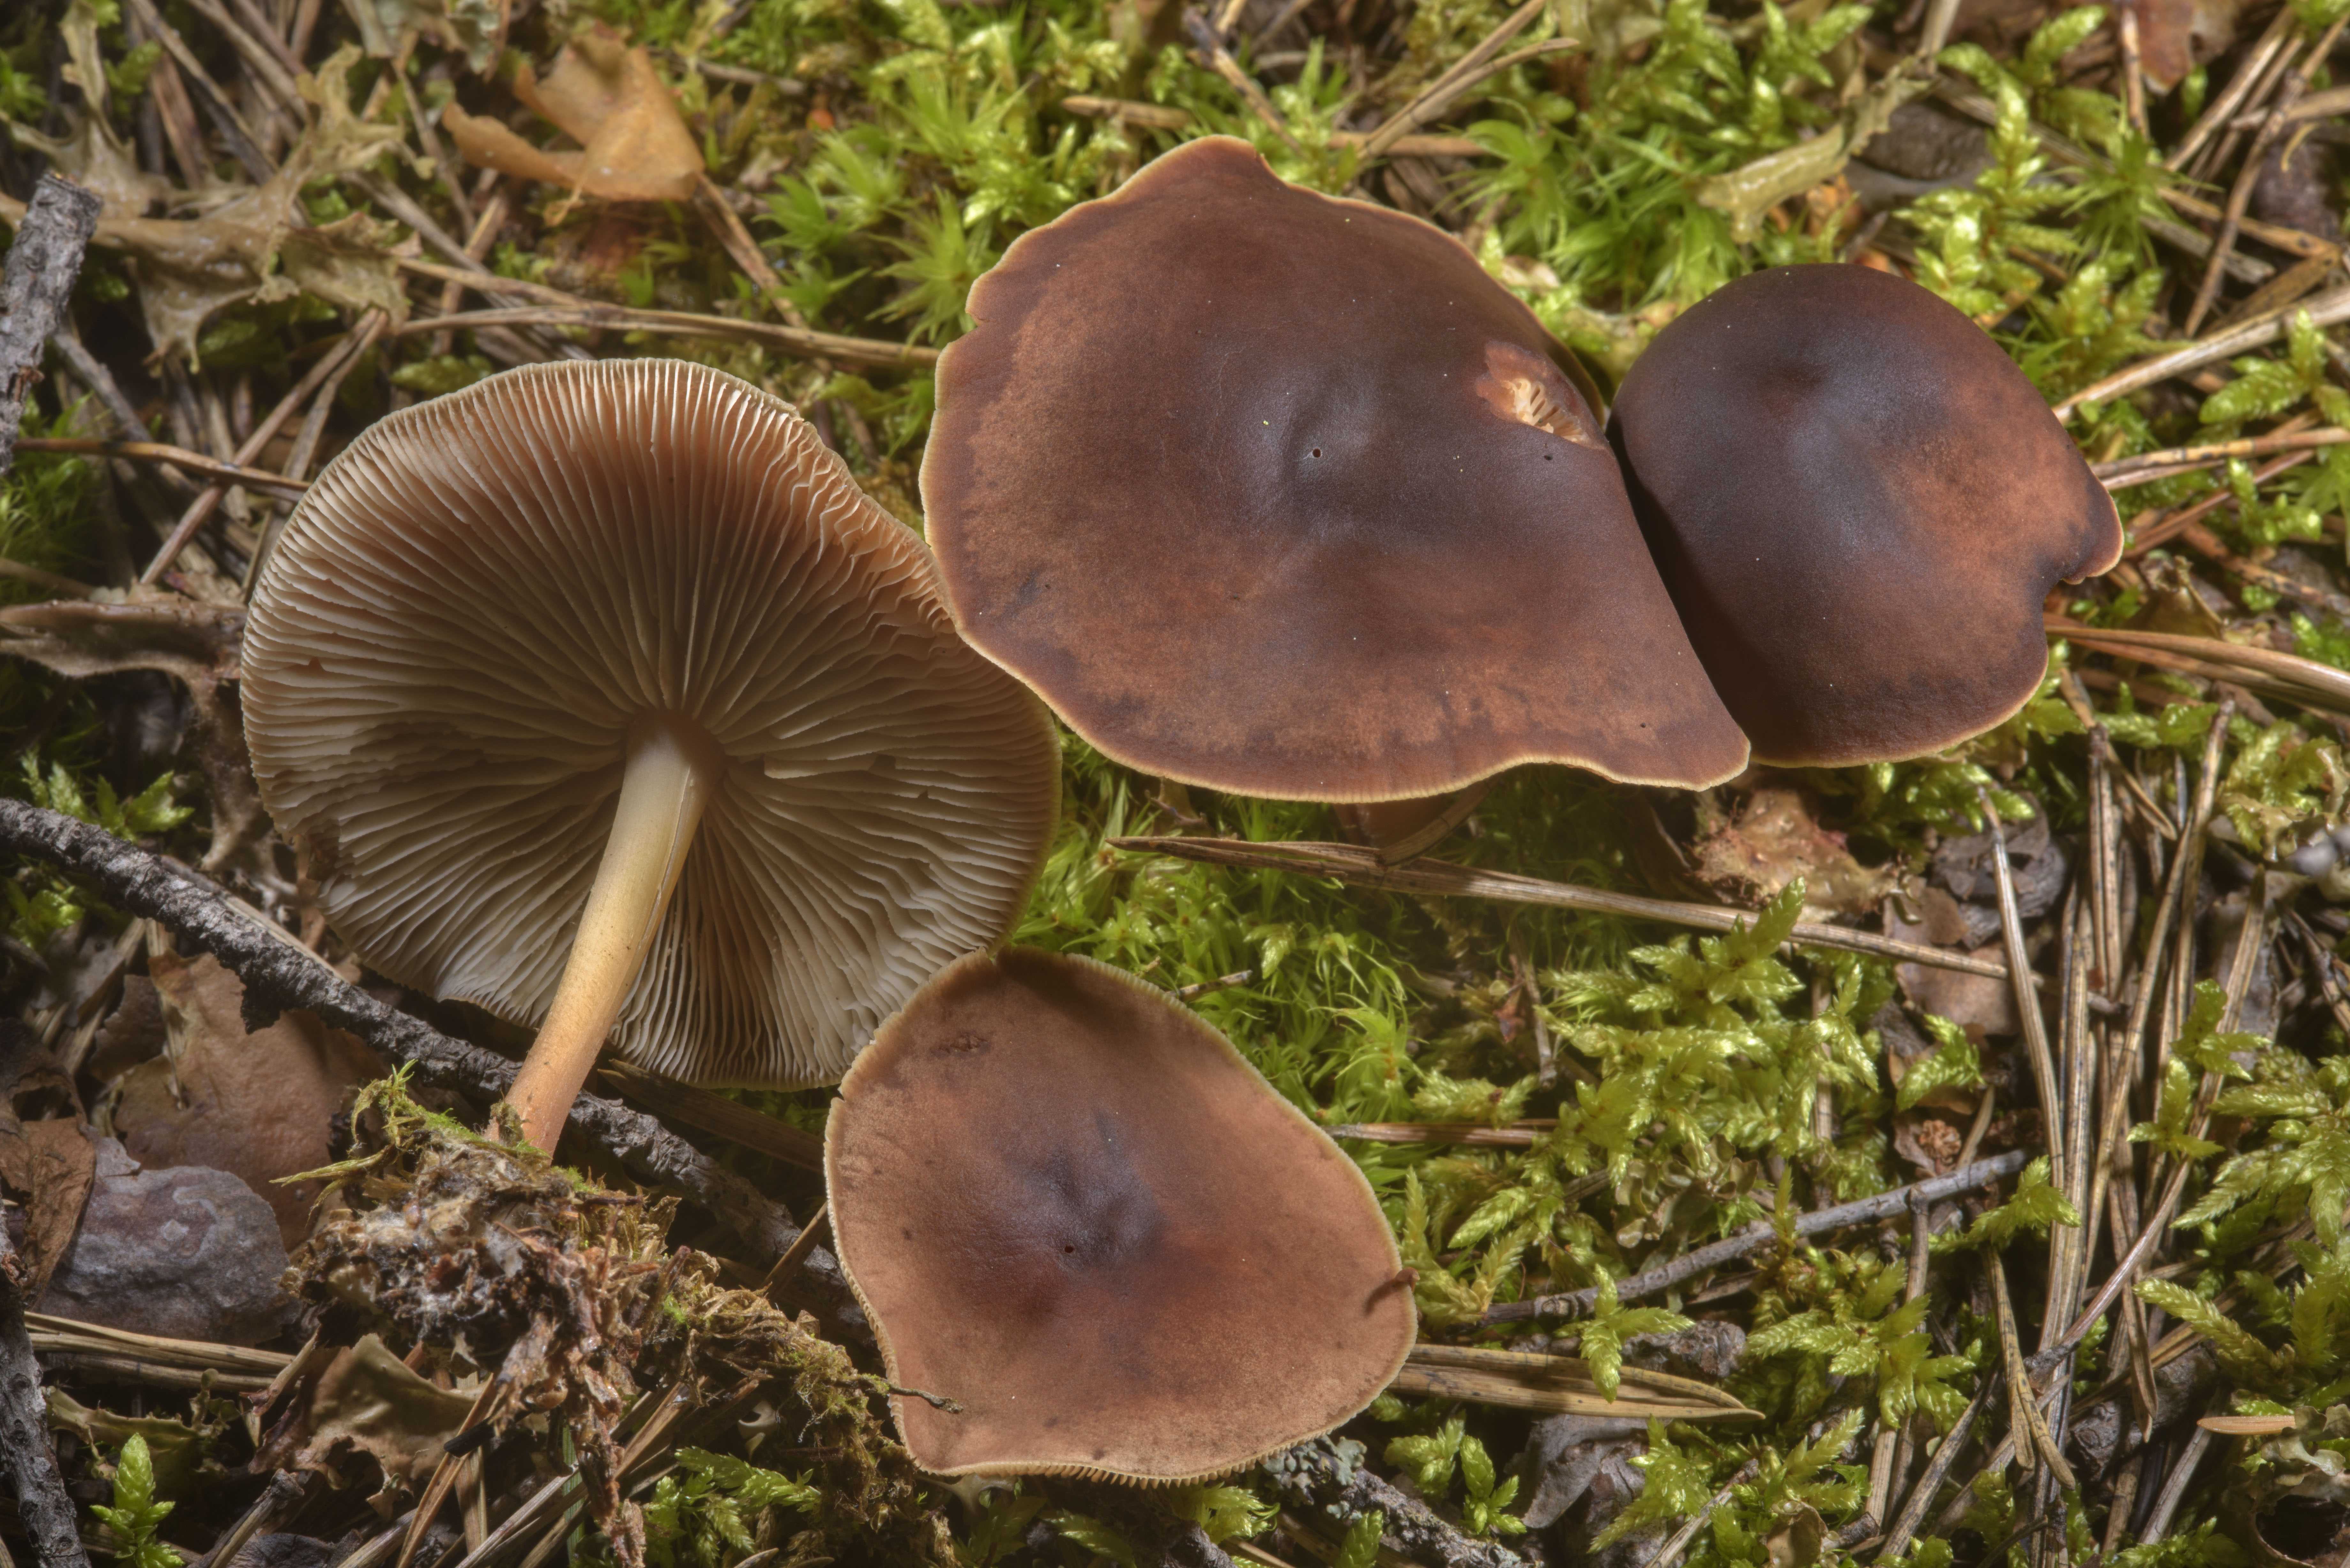 Гимнопус дуболюбивый (gymnopus dryophilus) –  грибы сибири